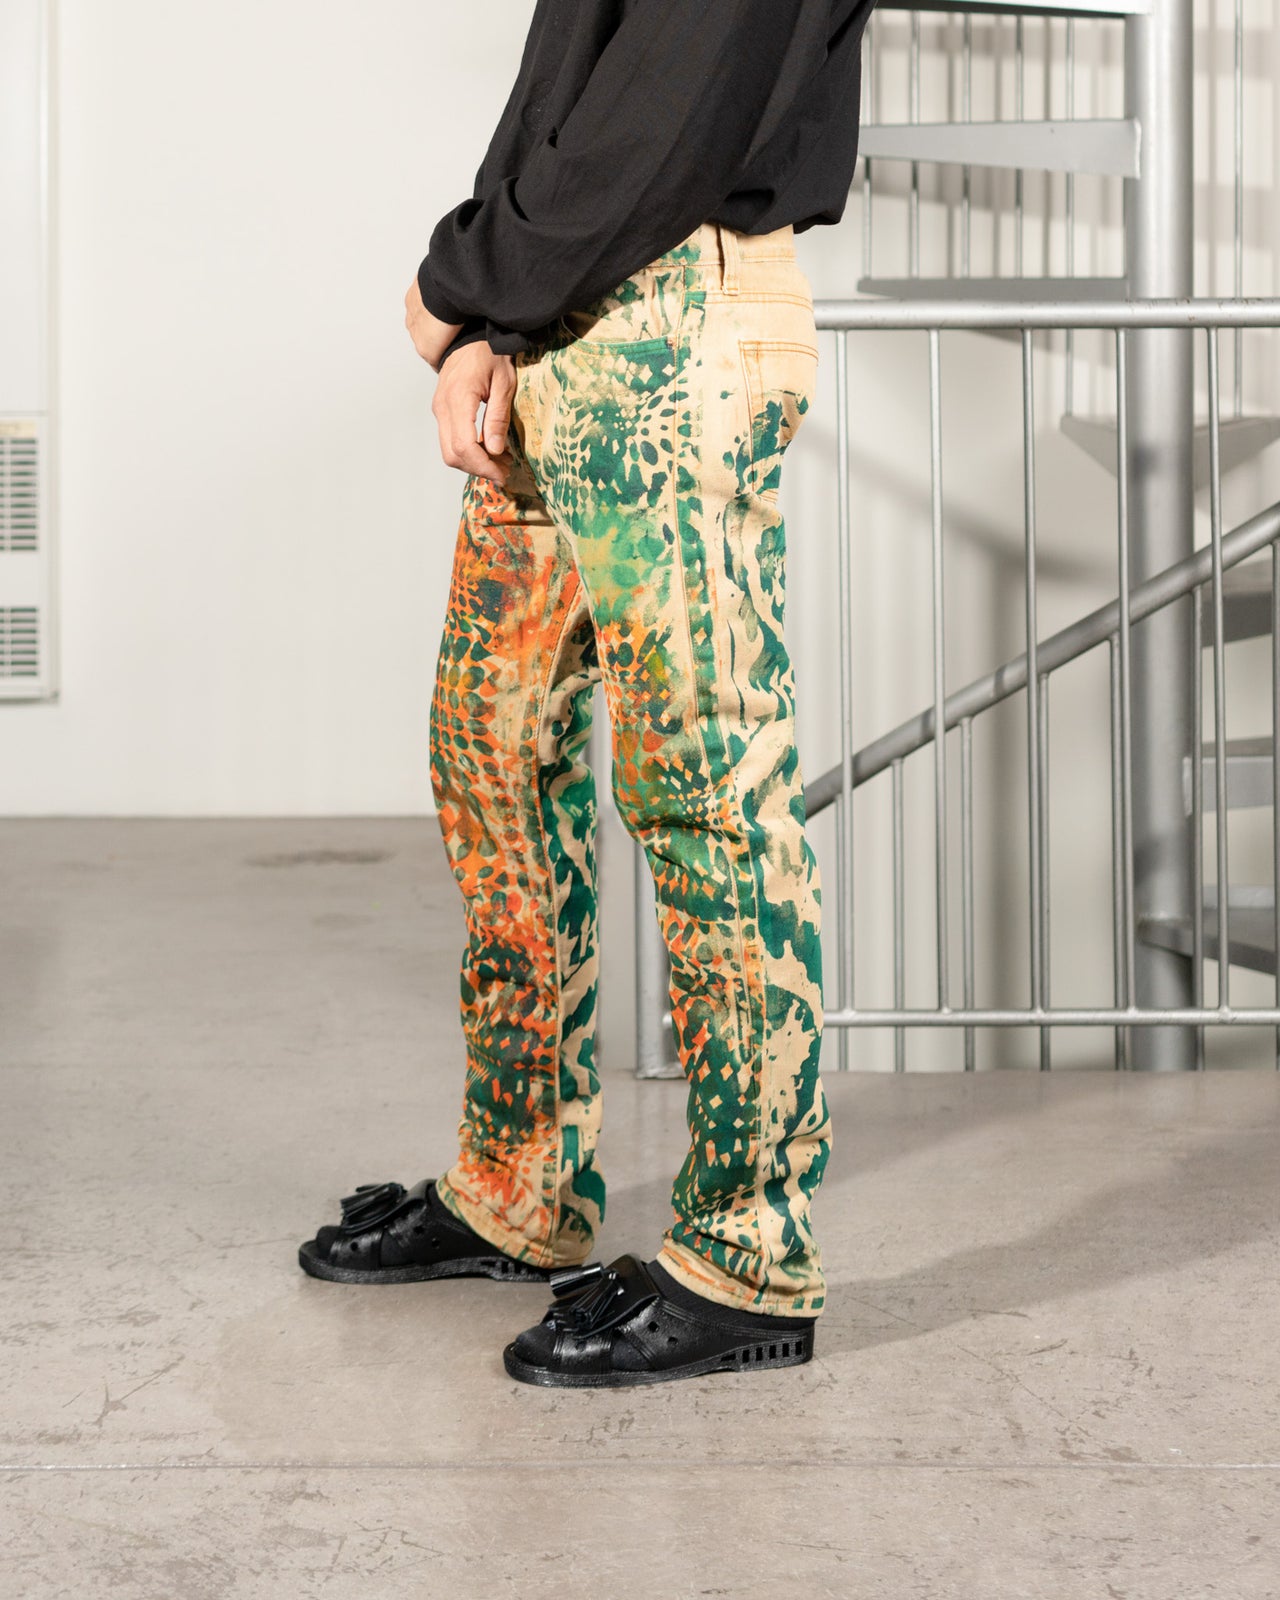 x RAGO Levi's 501 Painted Pants (Tan/Green)